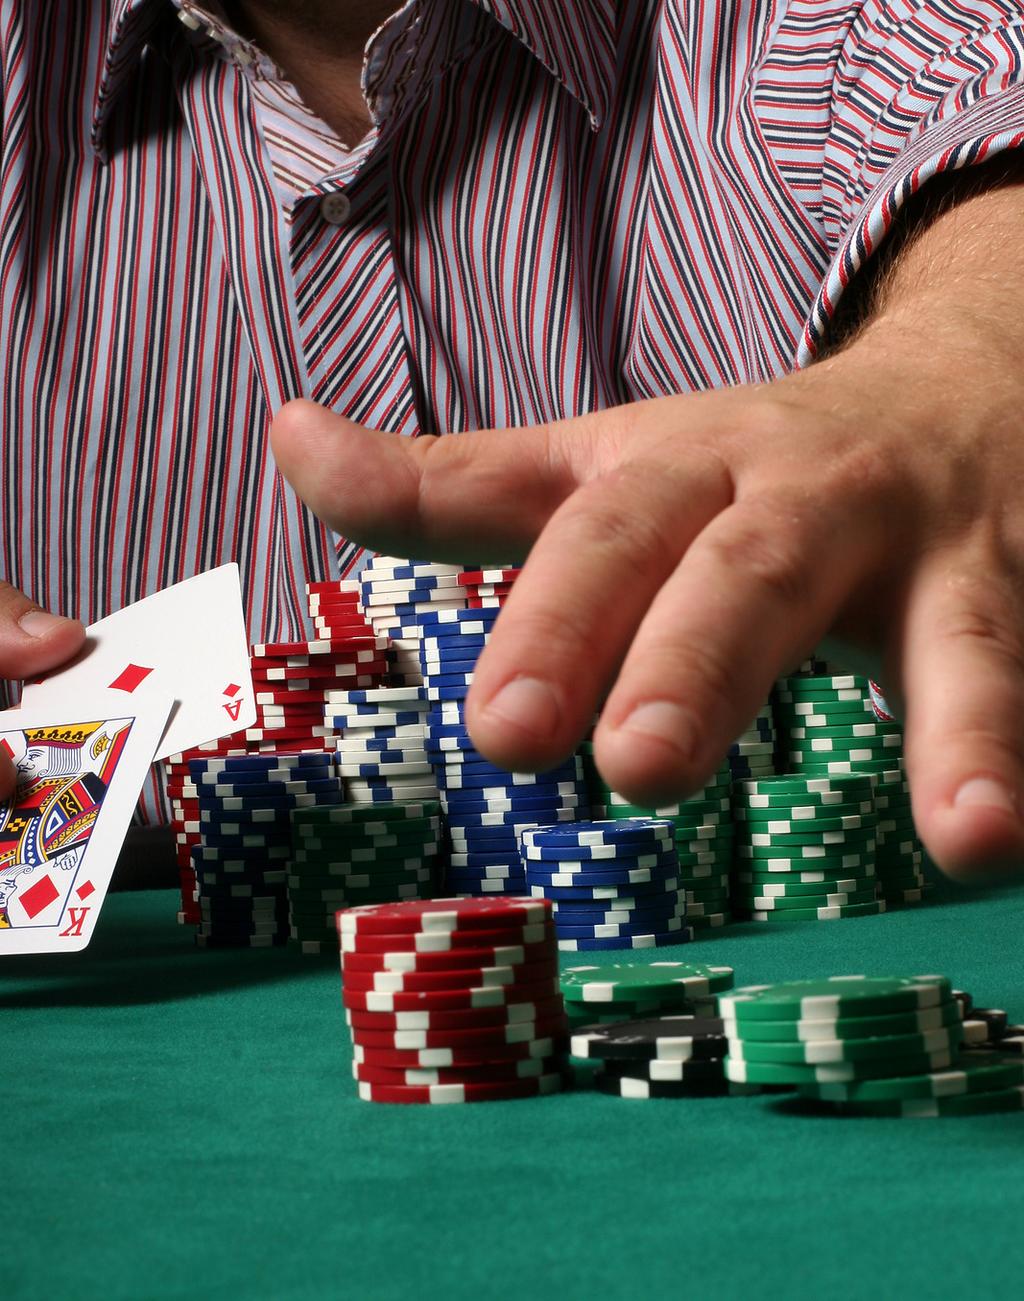 FX COACHING Susquehanna has held in-house poker tournaments to recruit